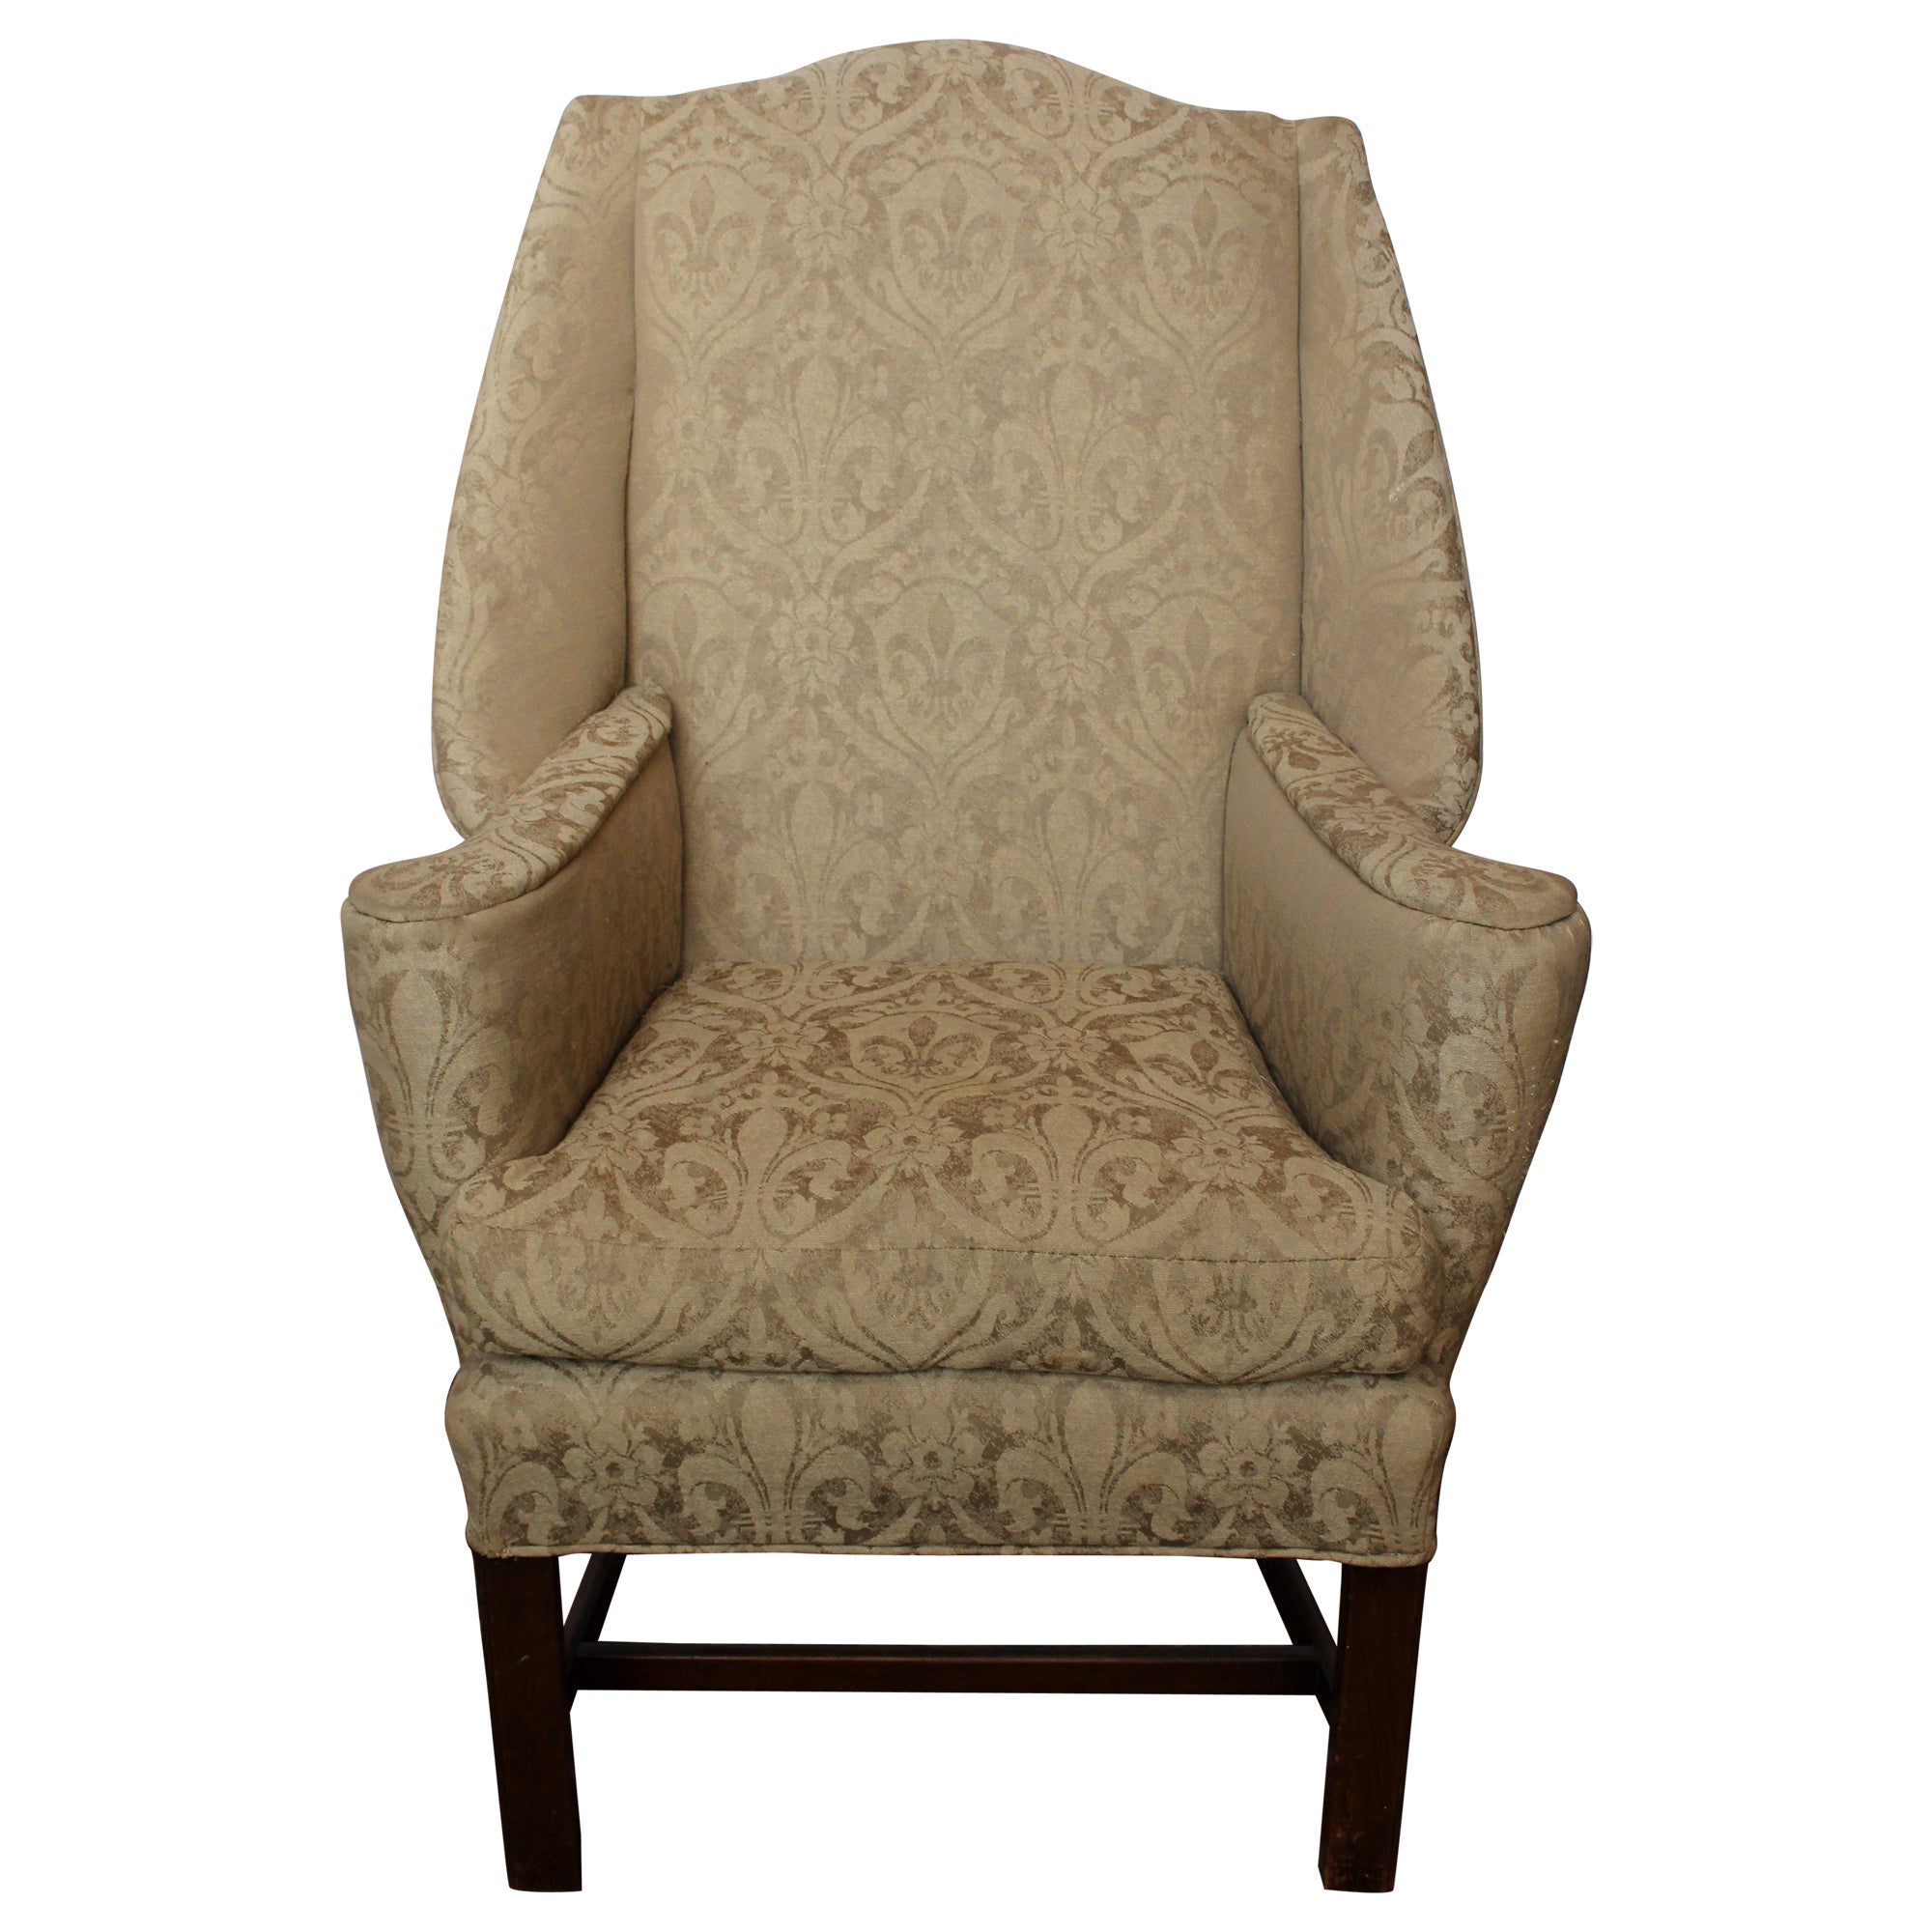 c. 1780 Irish Sleigh Back Wing Chair